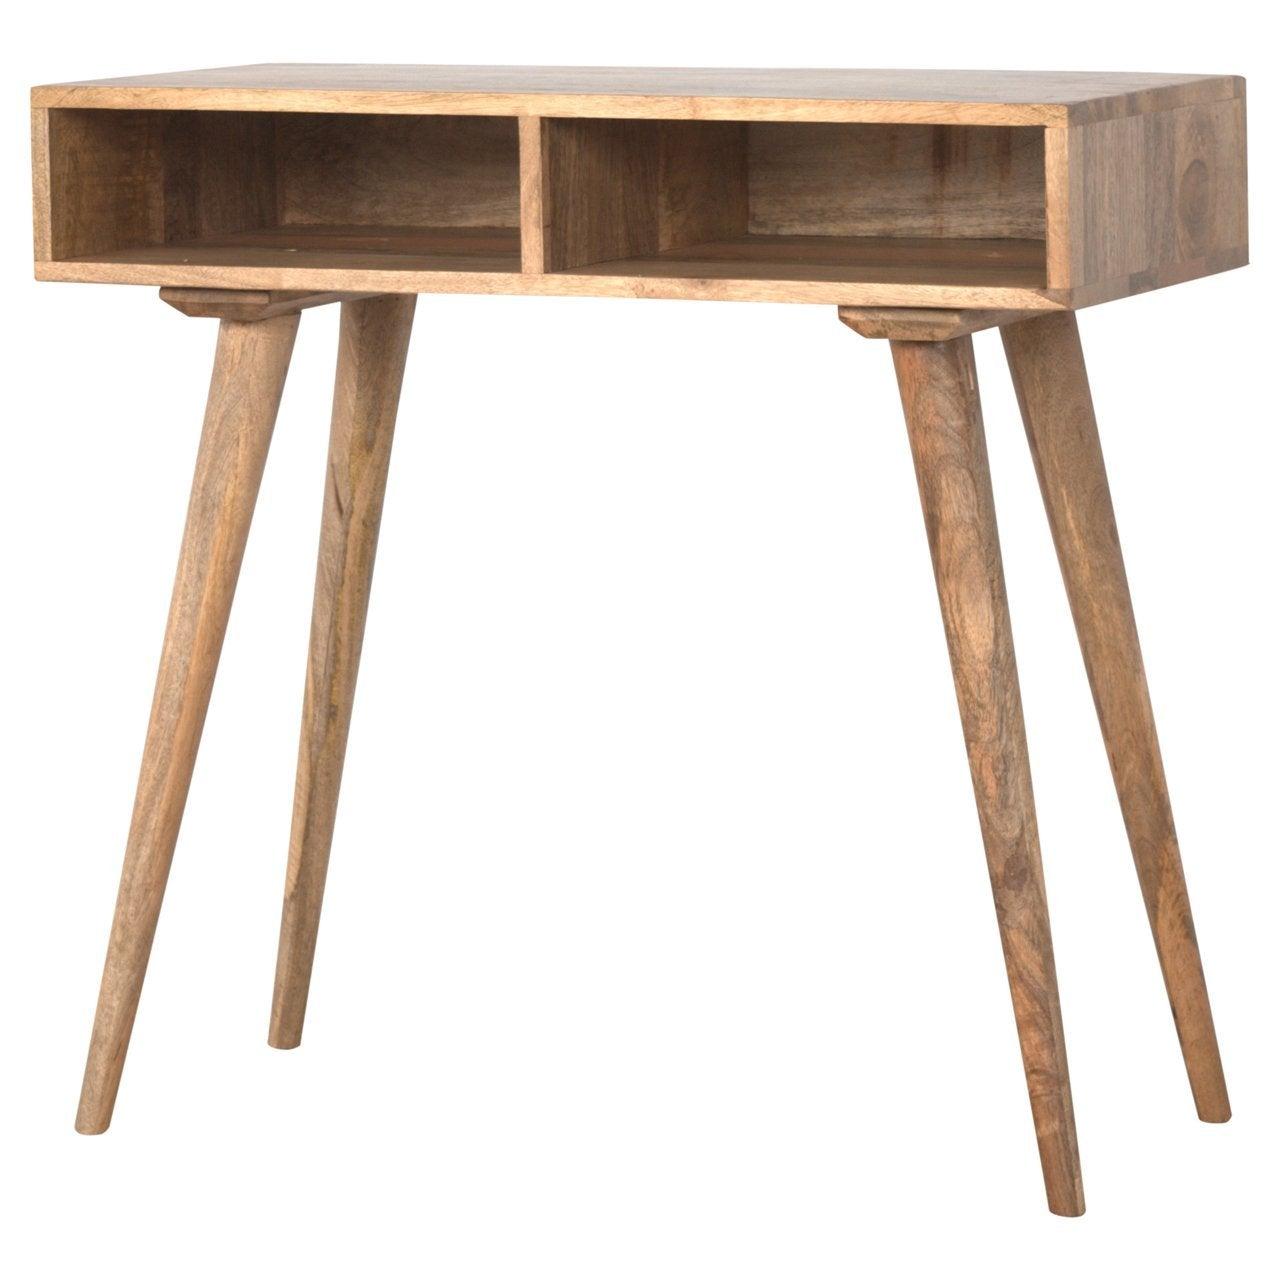 Nordic style open shelf writing desk - crimblefest furniture - image 5